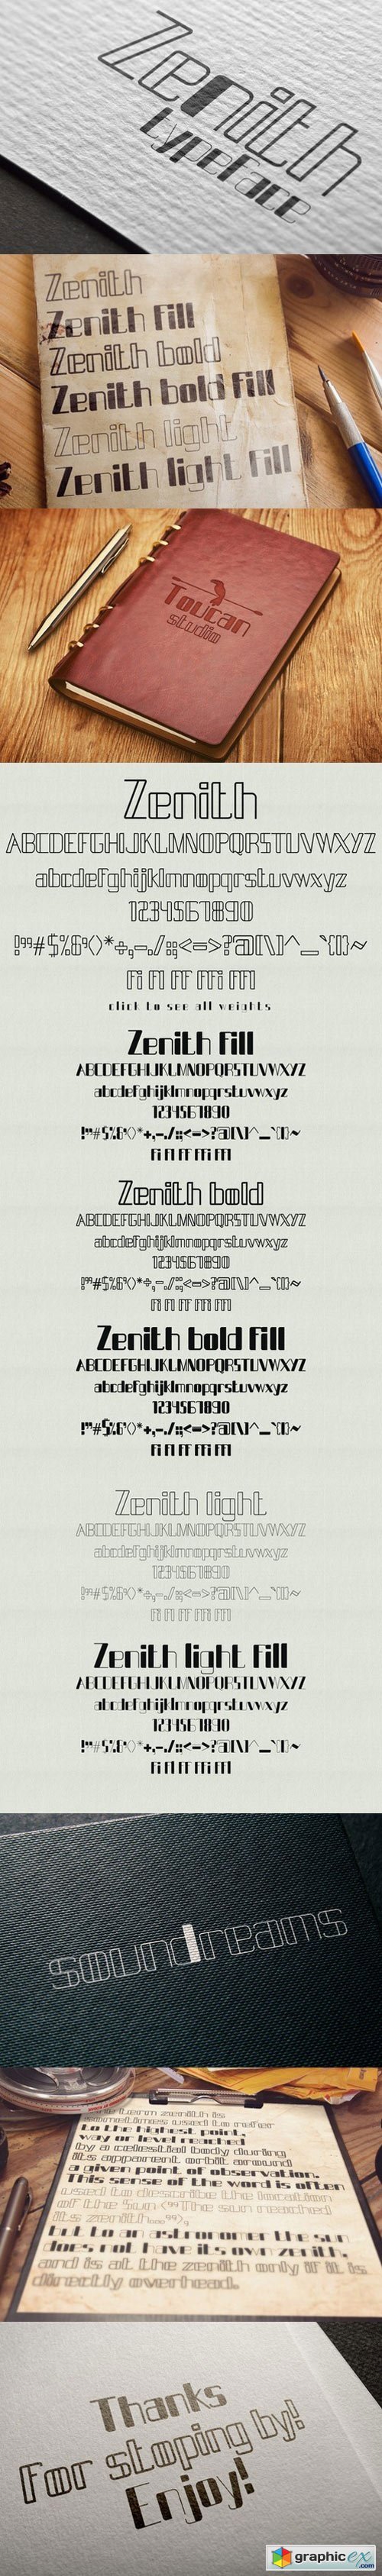 Zenith typeface